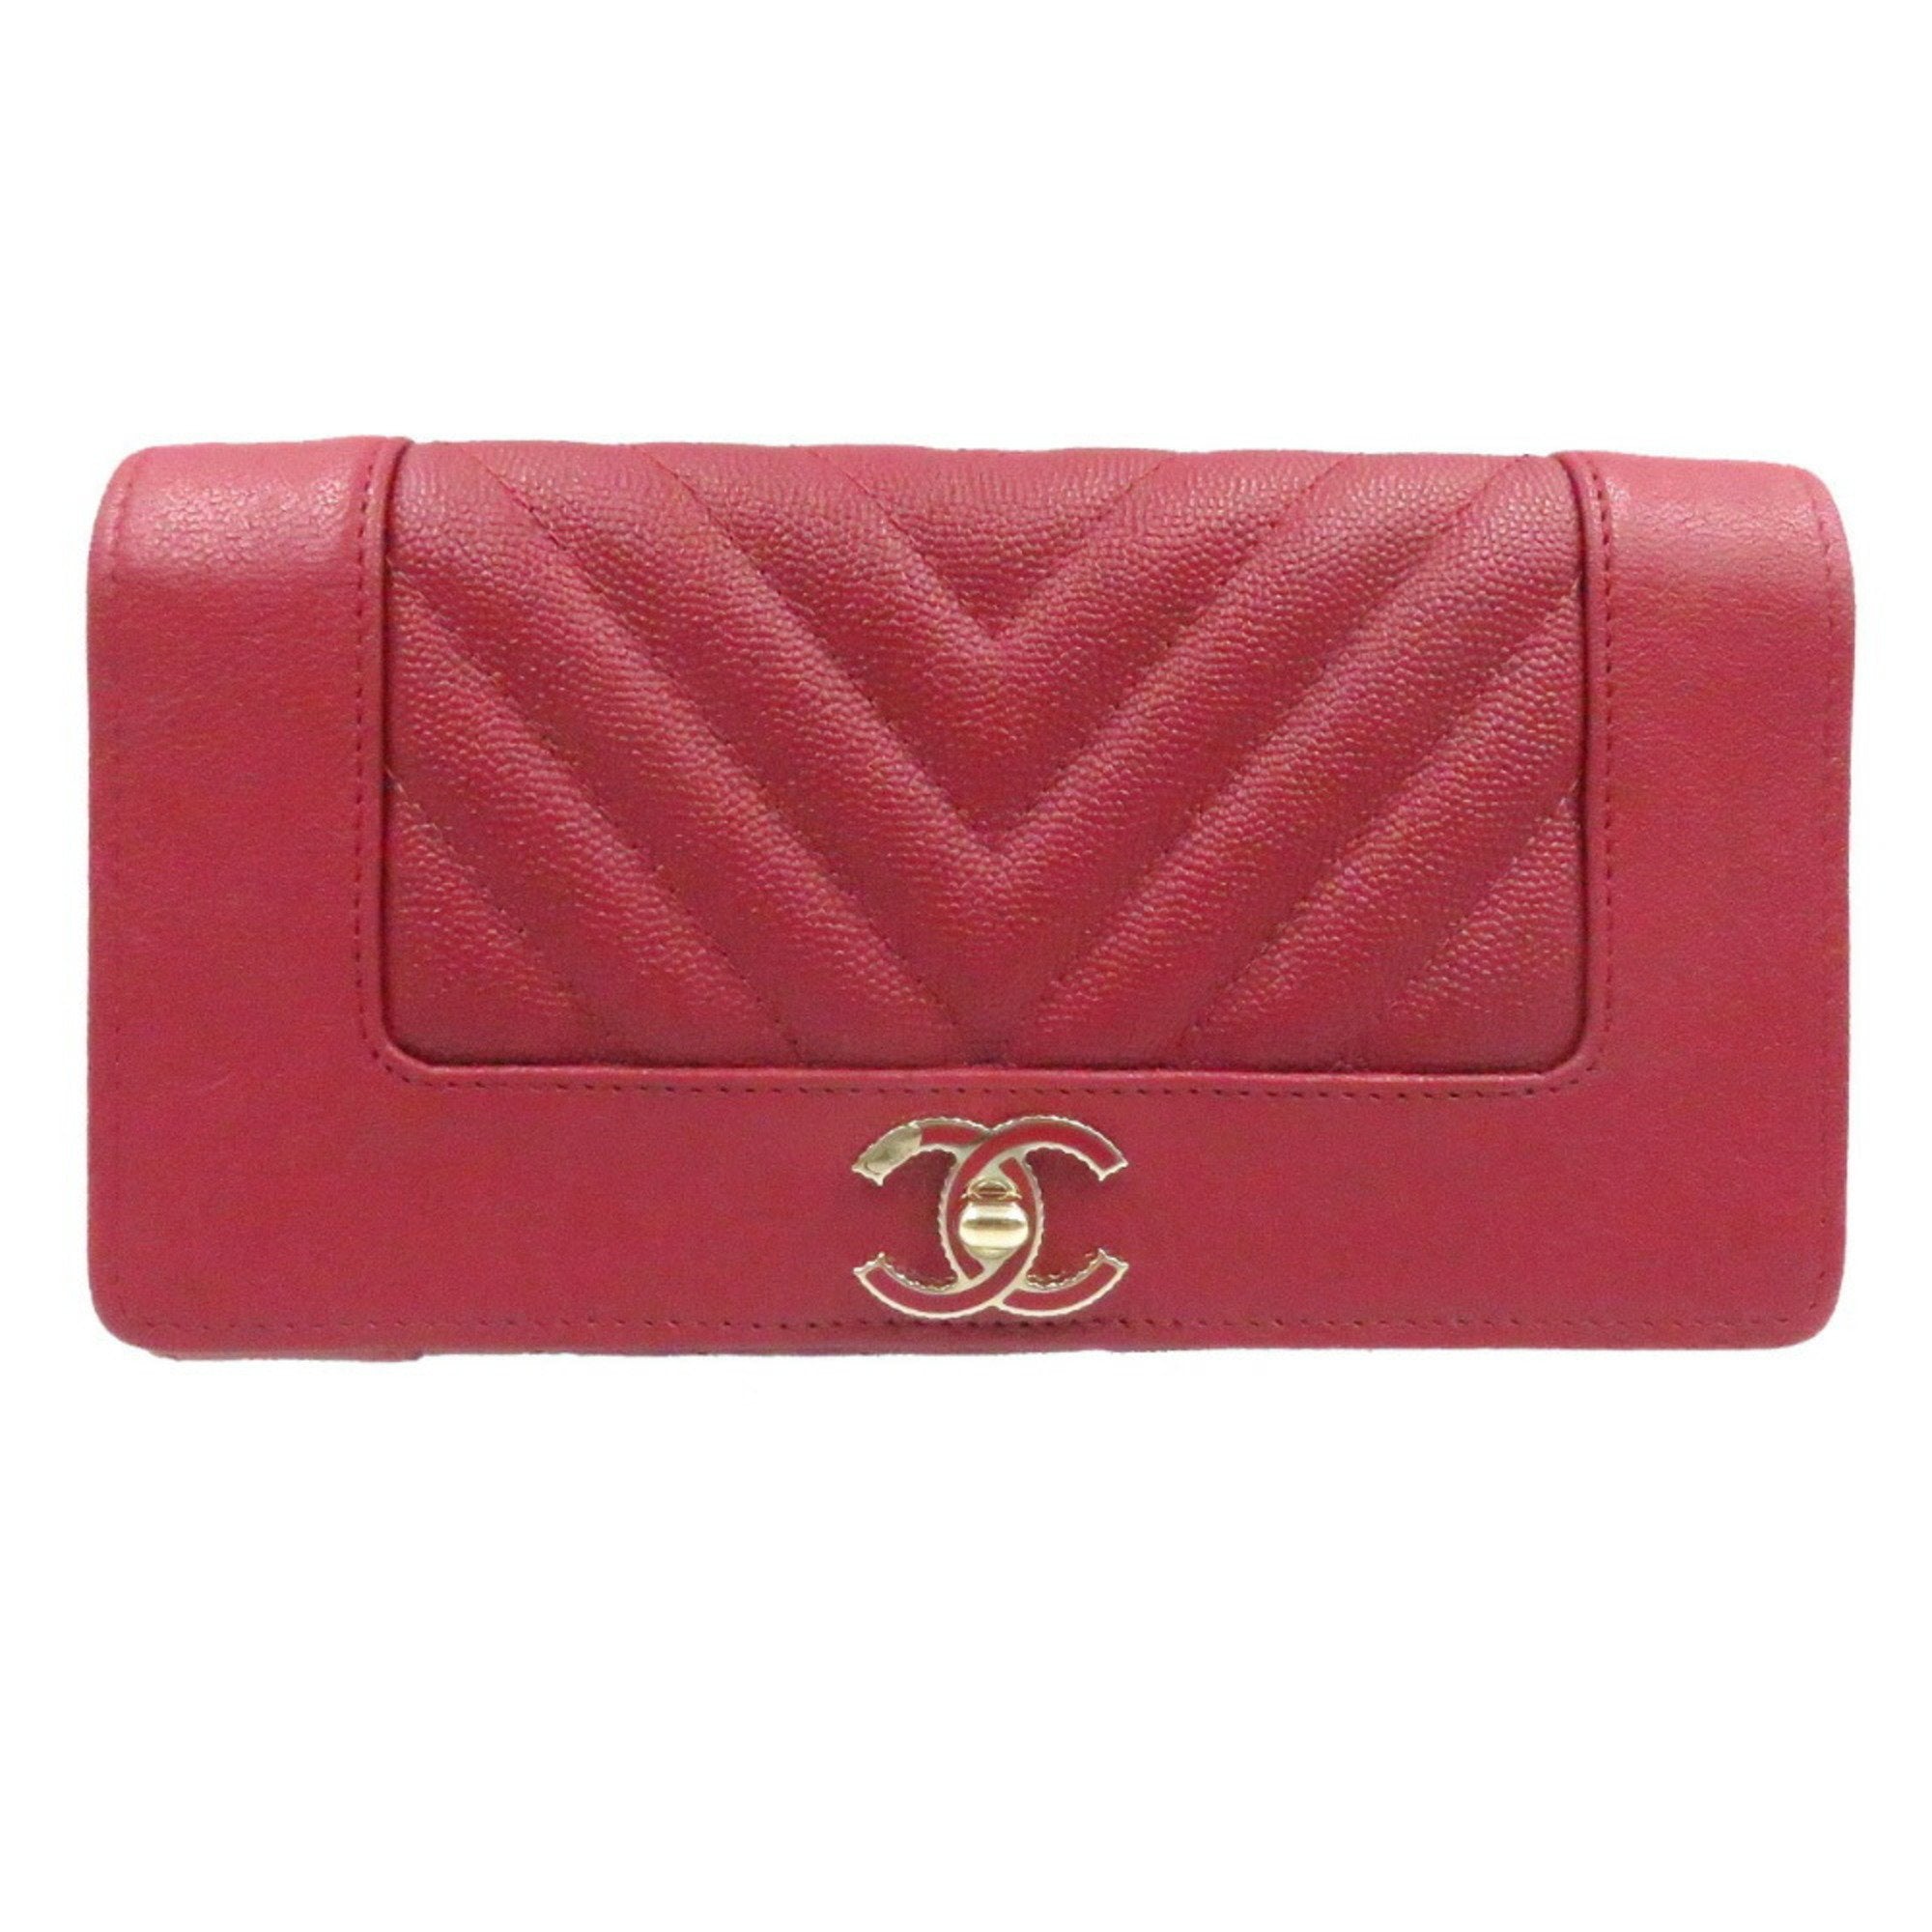 Chanel Mademoiselle Chevron Caviar Skin Red 28s Long Wallet 0220 CHANE